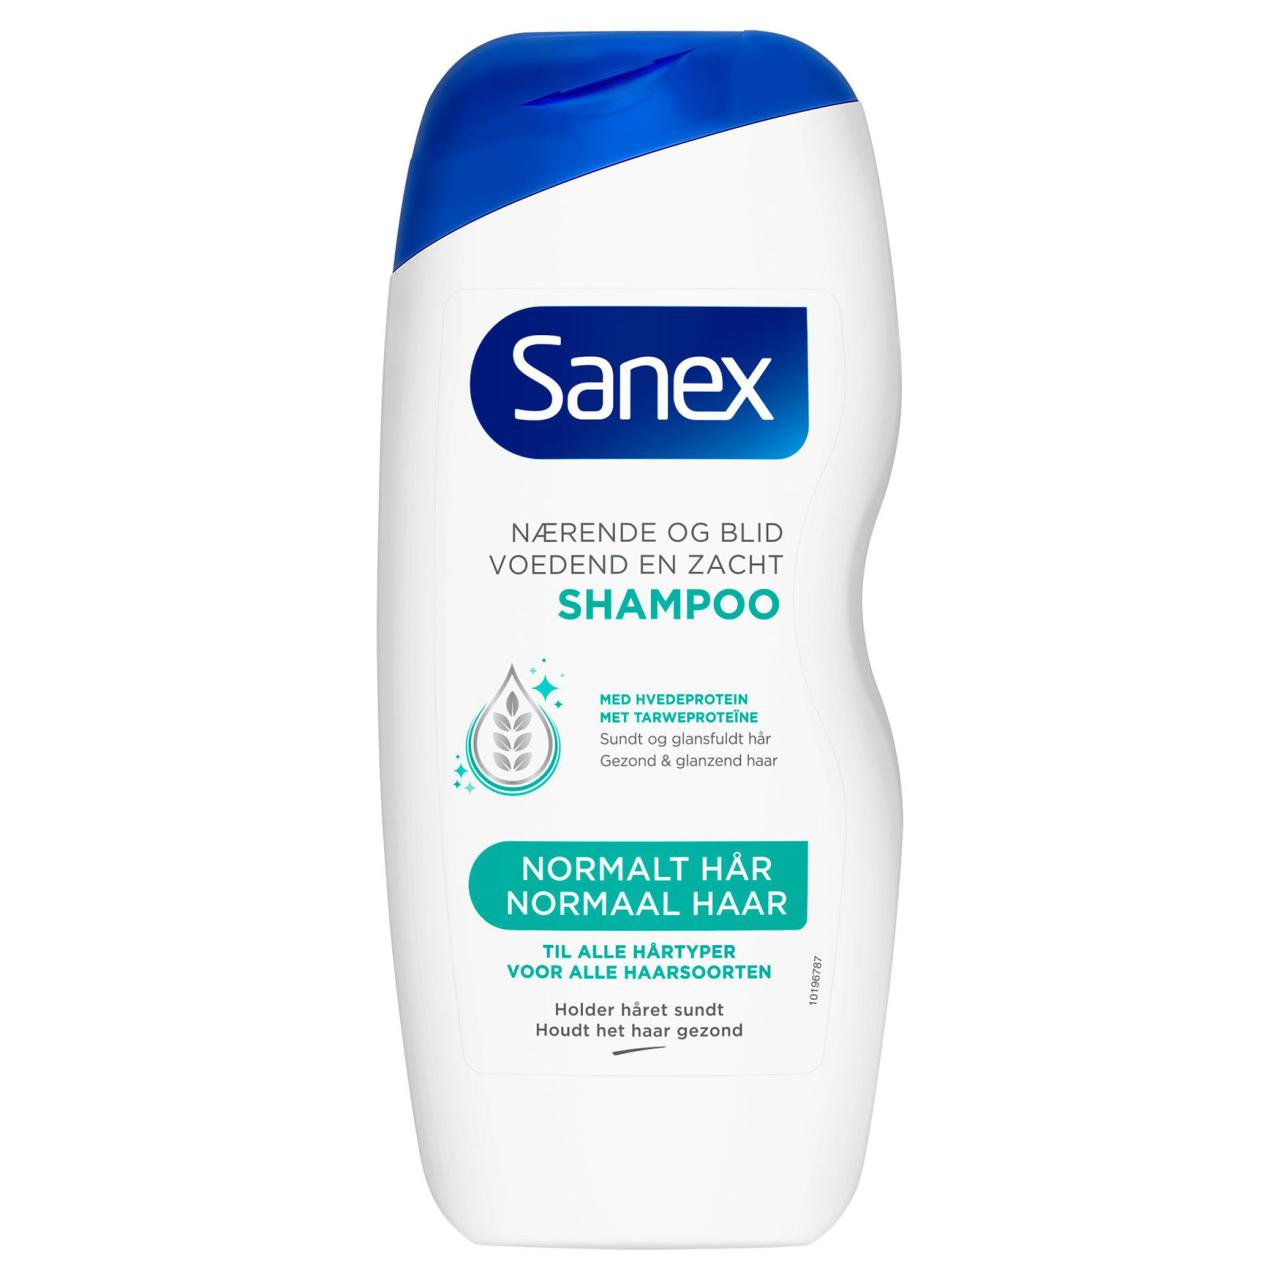 Sanex Shampoo Normalt hår 250 ml